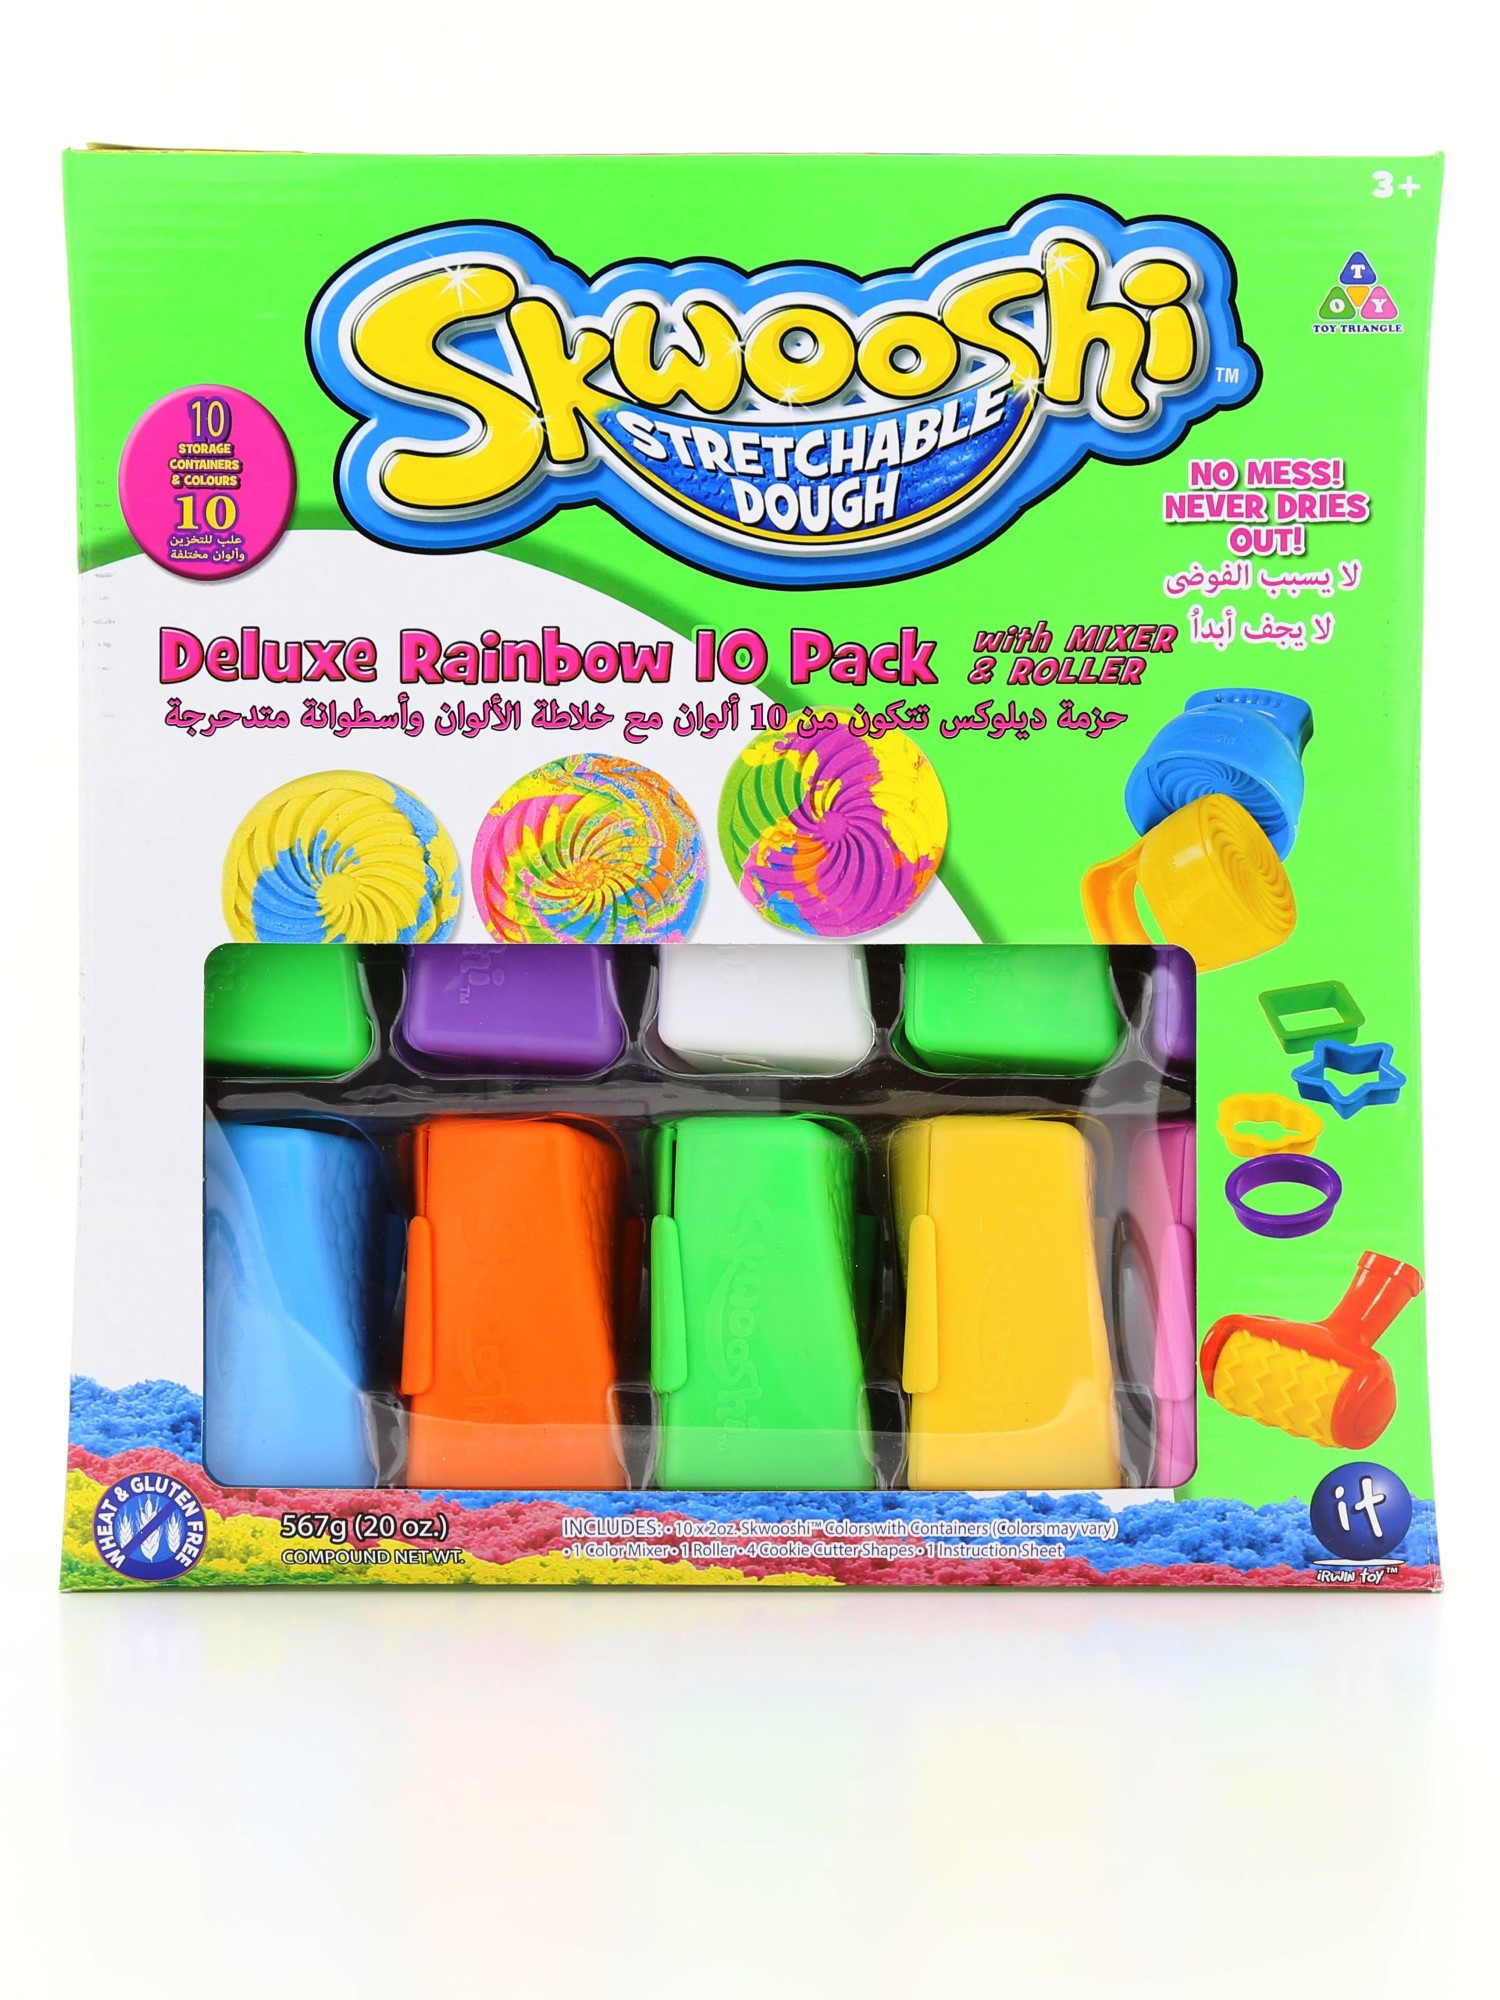 Skwooshi Stretchable Dough Deluxe Rainbow